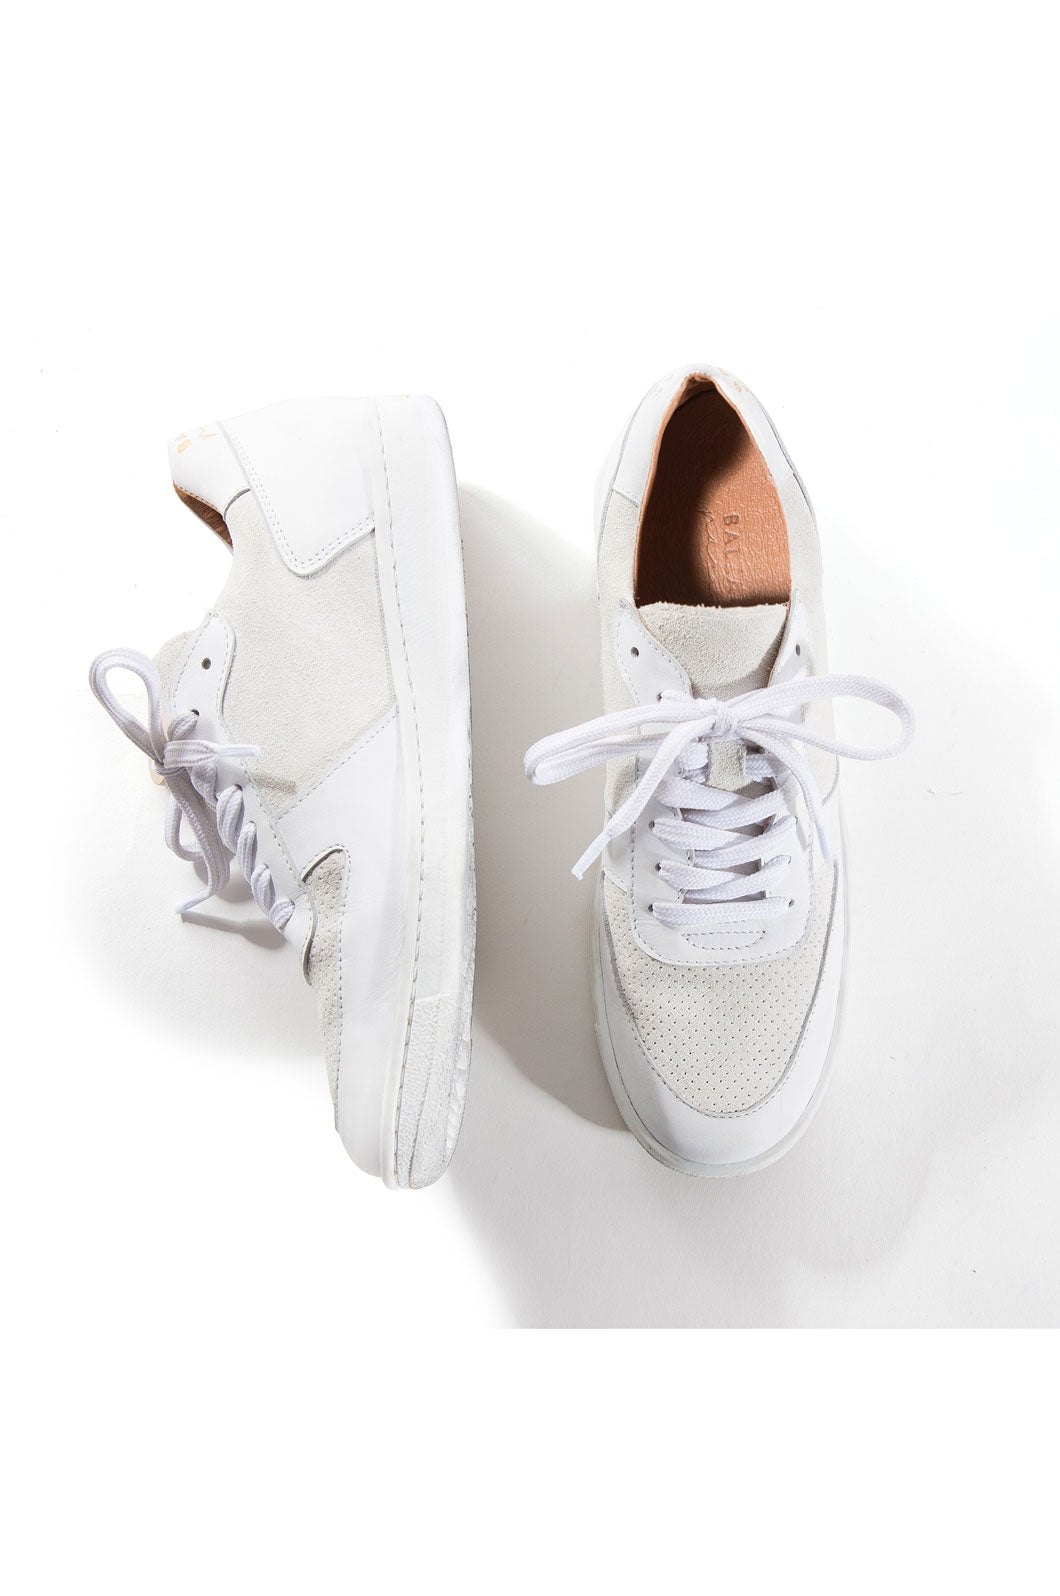 White Colin sneakers